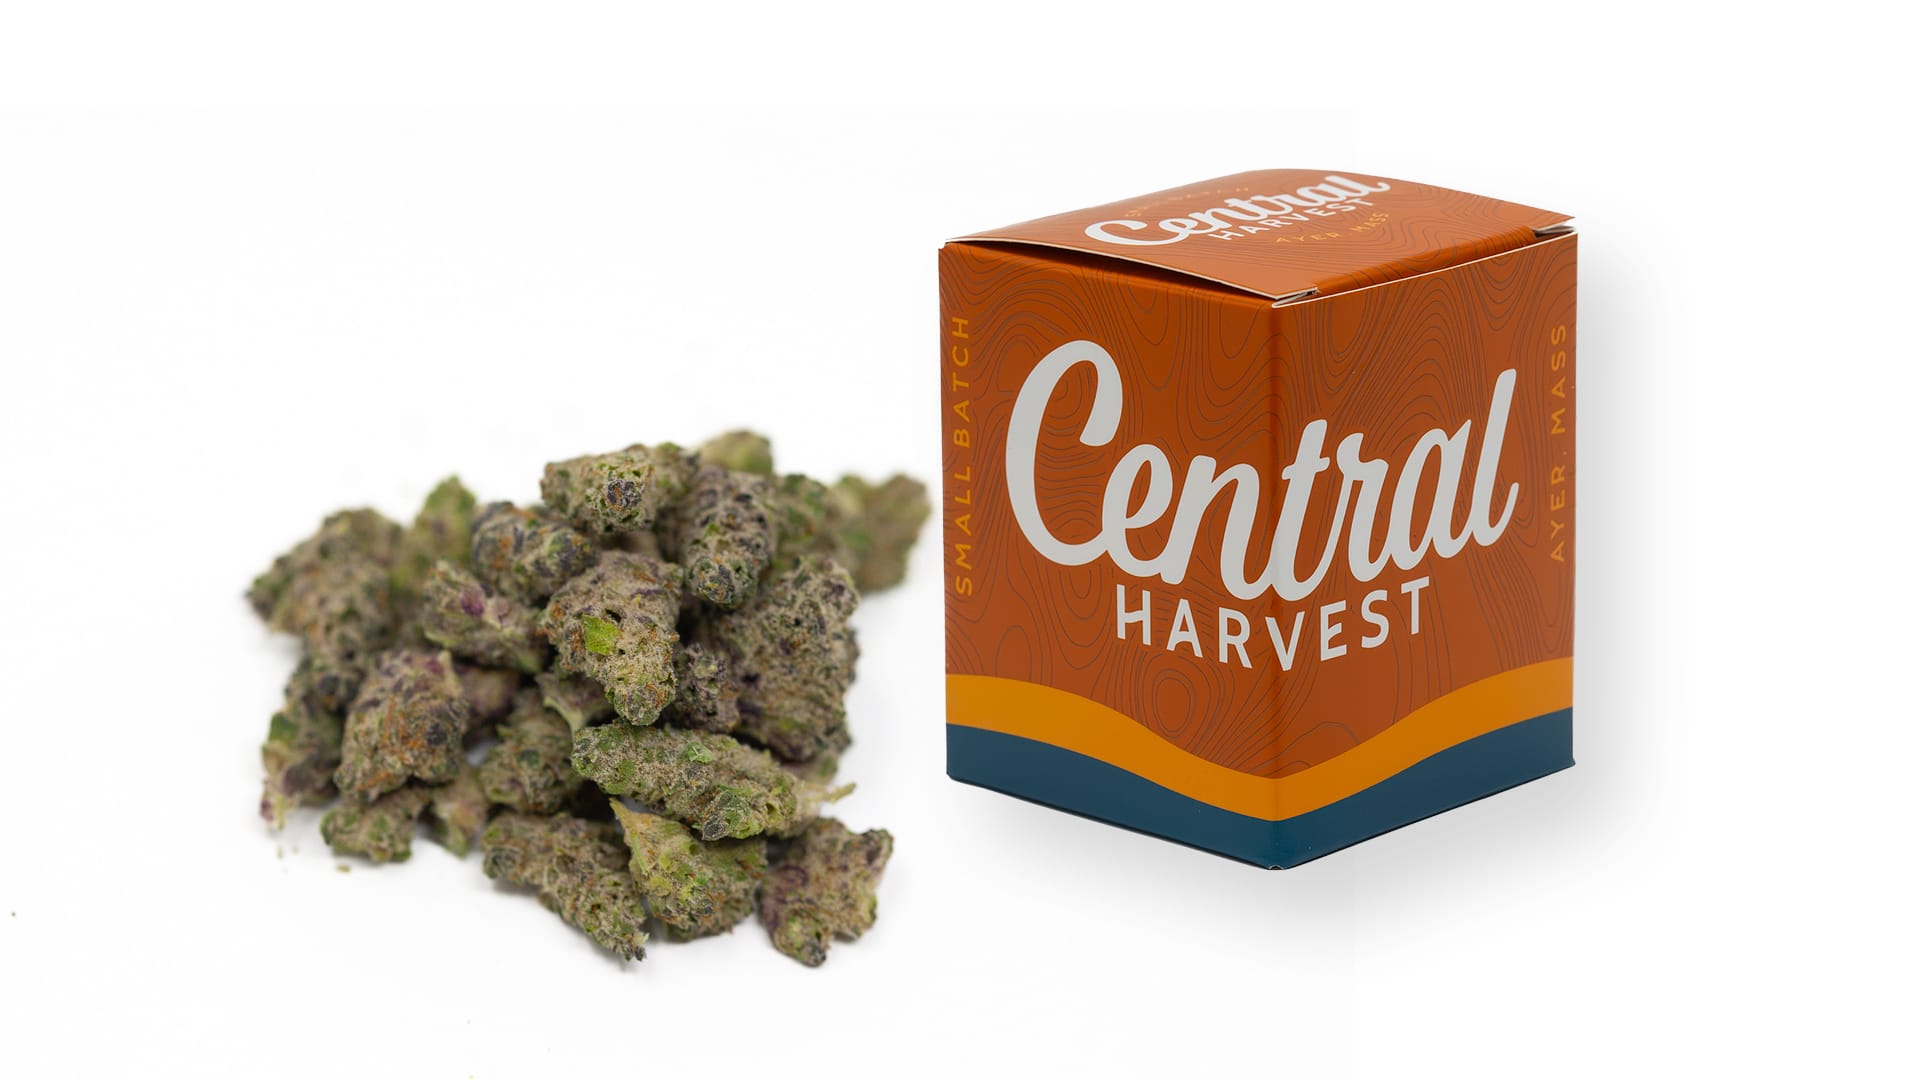 Pistachio is a Hybrid Cannabis Strain grown at Central Harvest